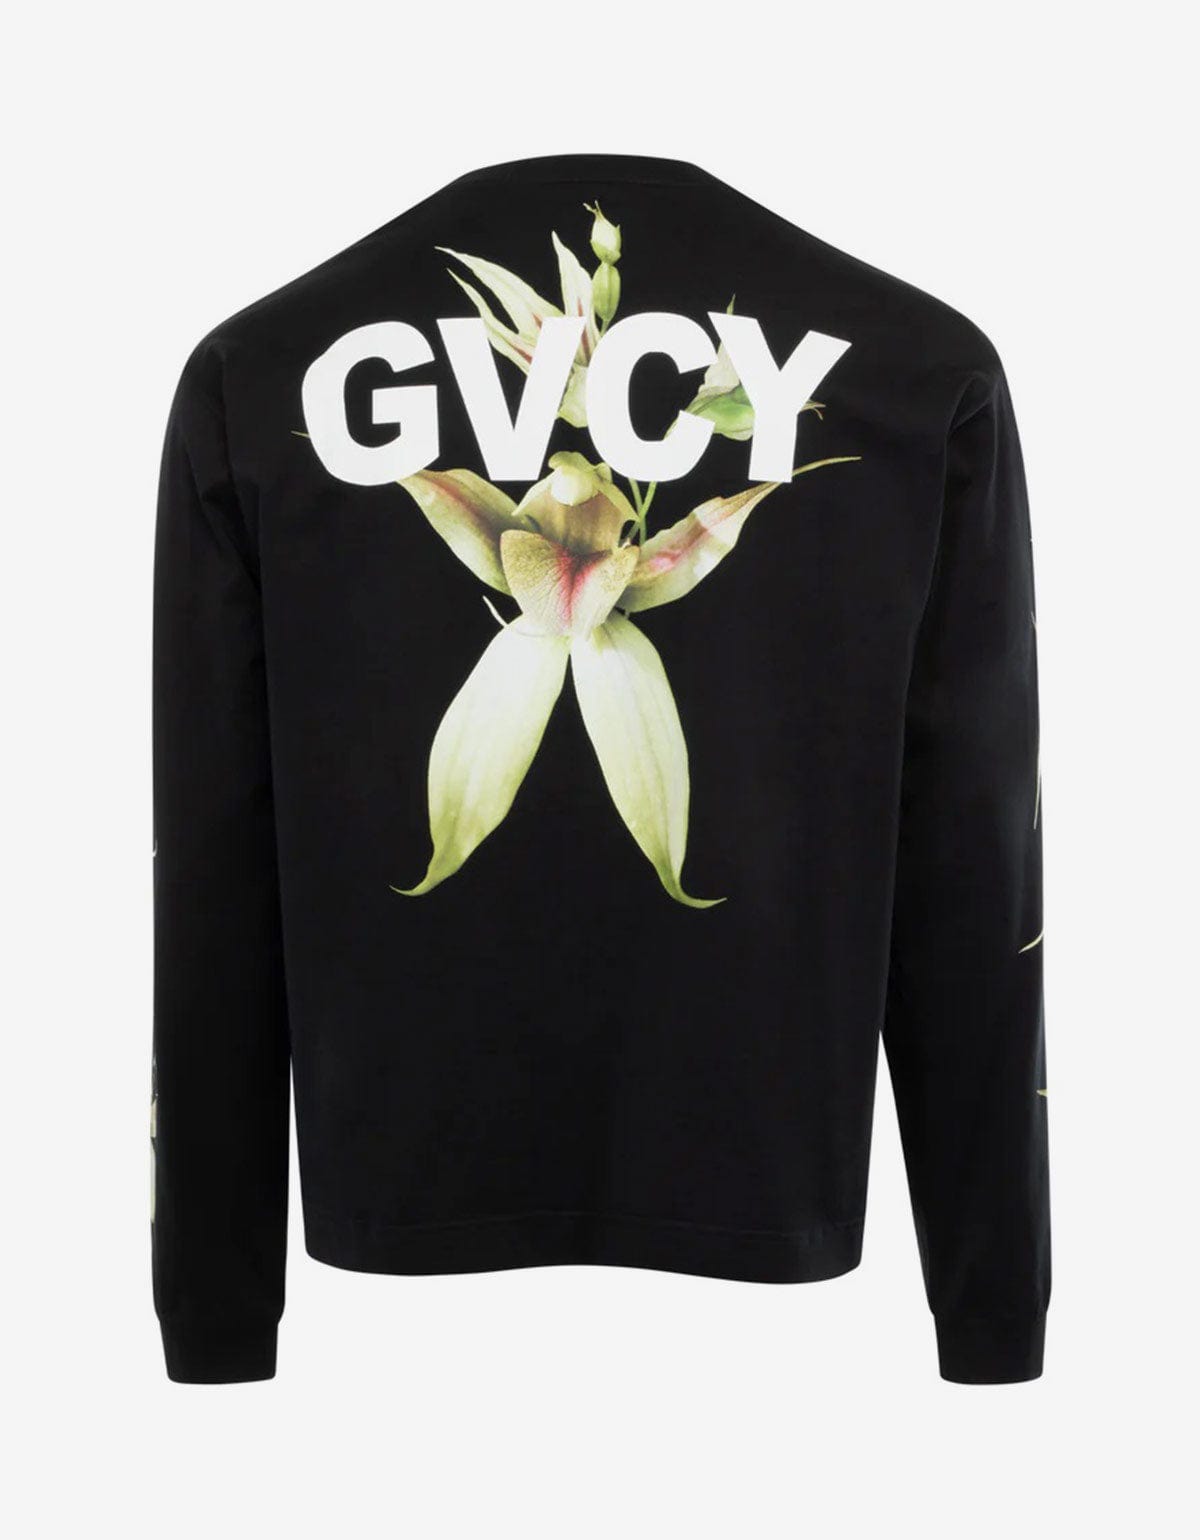 Givenchy Givenchy Black GVCY Long Sleeve T-Shirt